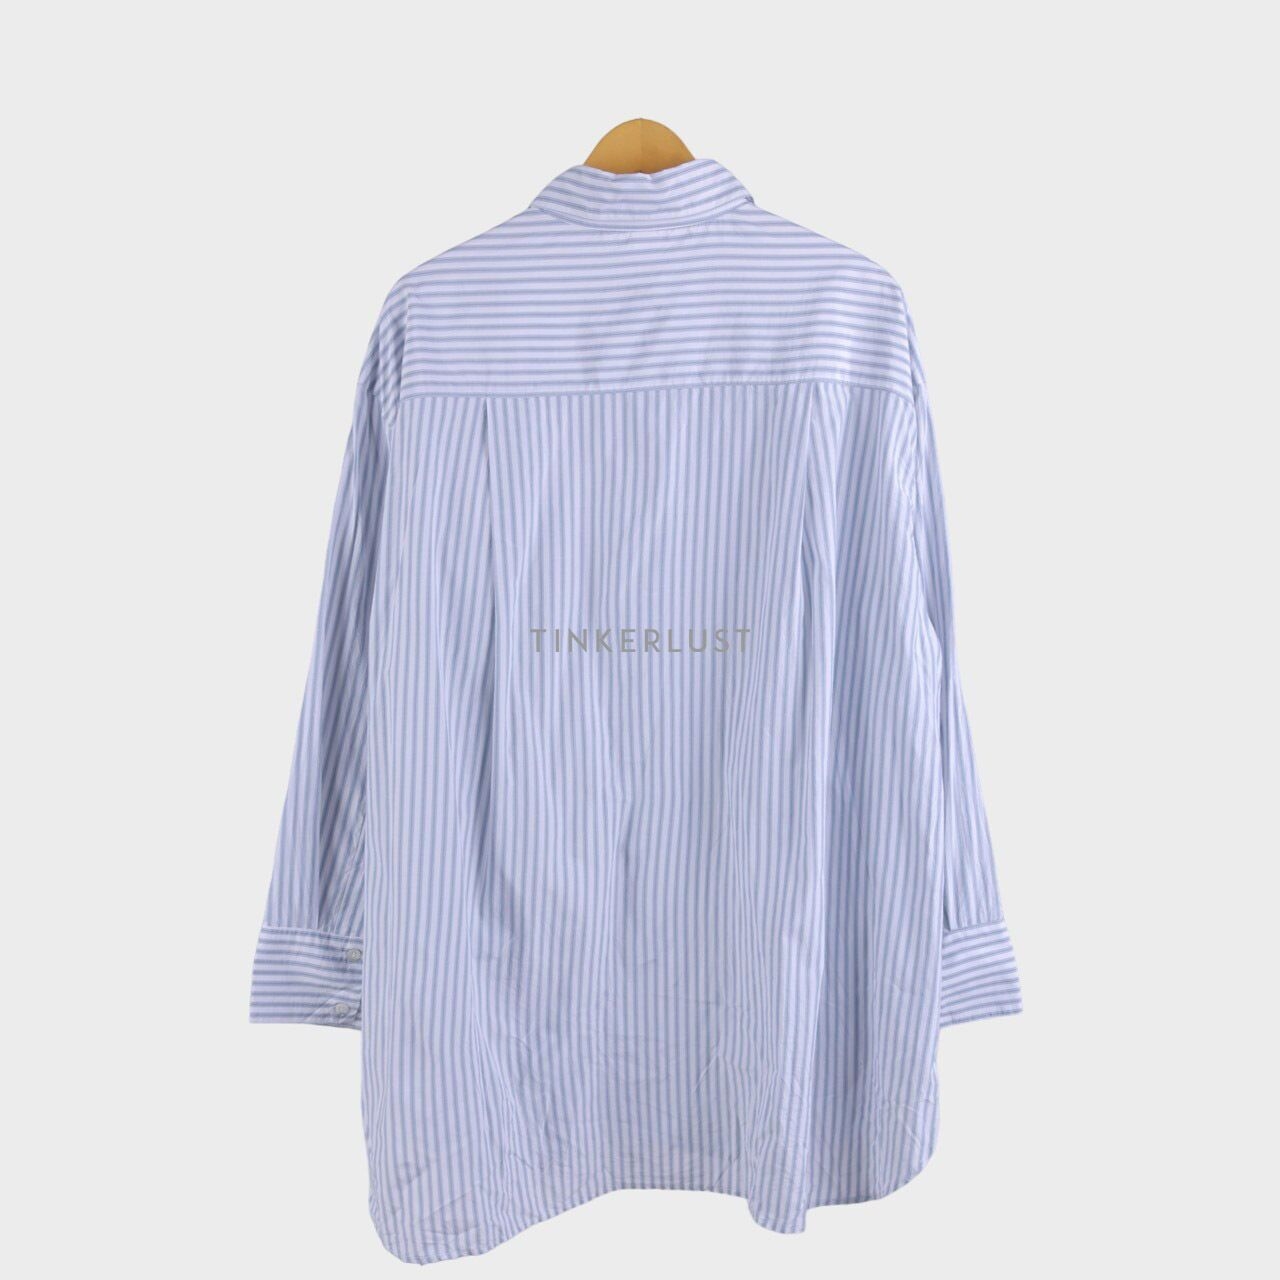 H&M Blue & White Stripes Shirt